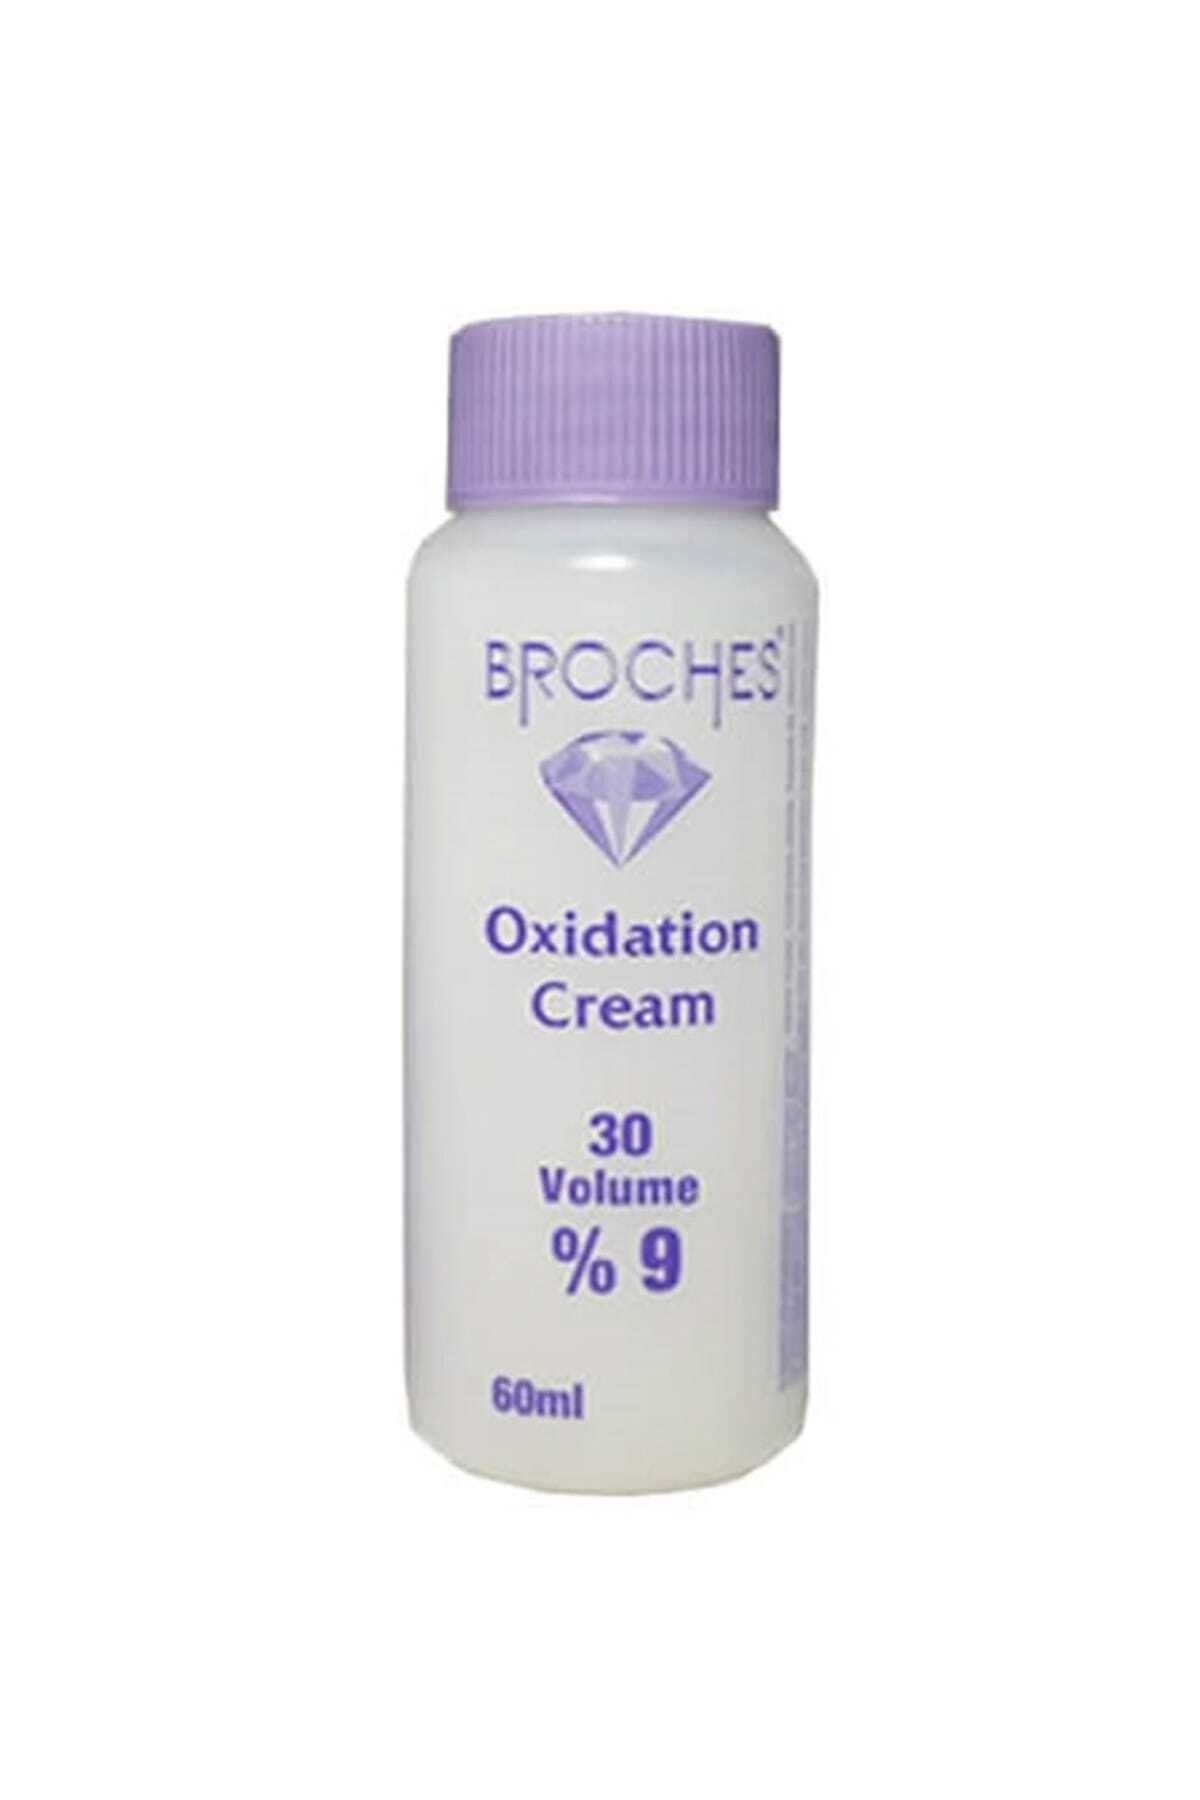 Go 2 Adet Broches Oksidan Cream %9- 30 Volum 60 Ml 8698782000077